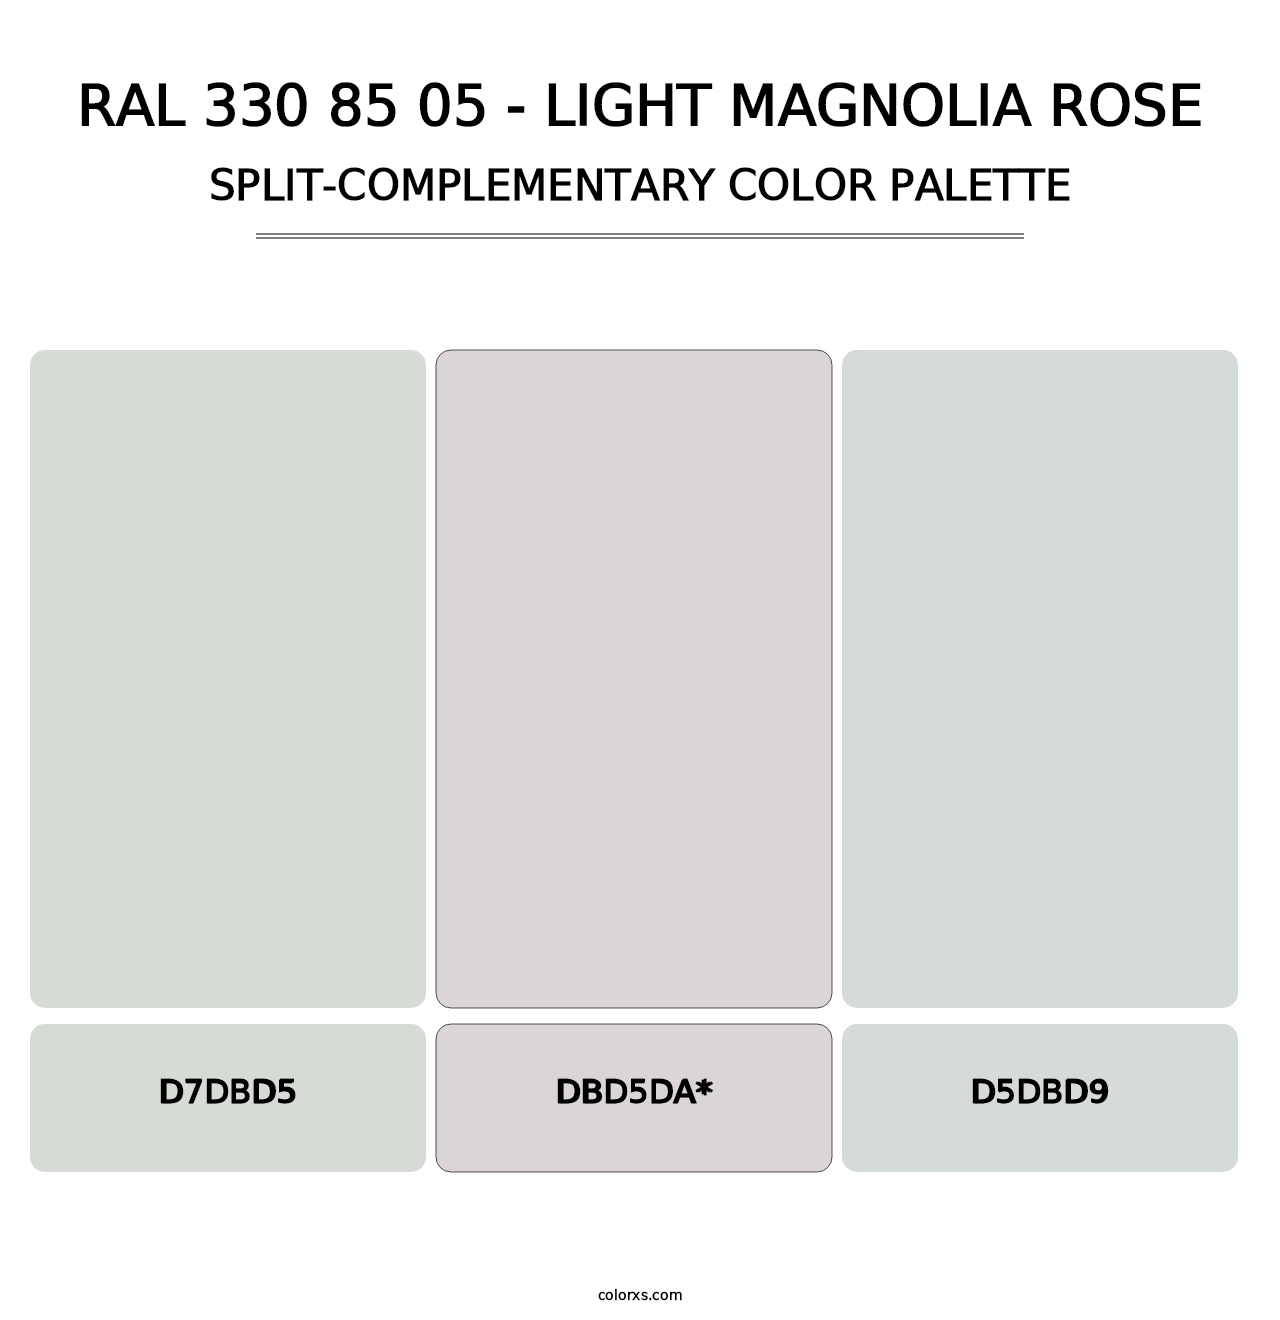 RAL 330 85 05 - Light Magnolia Rose - Split-Complementary Color Palette